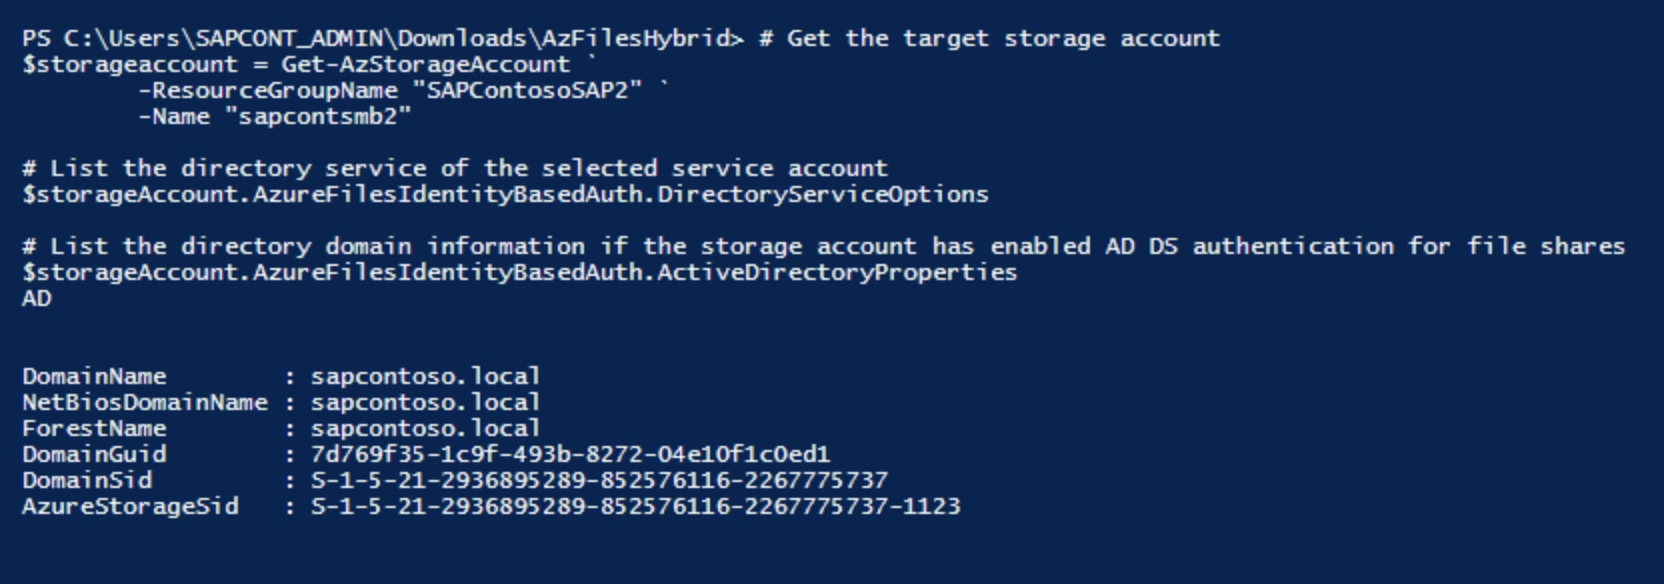 Screenshot of the PowerShell script to retrieve technical info.